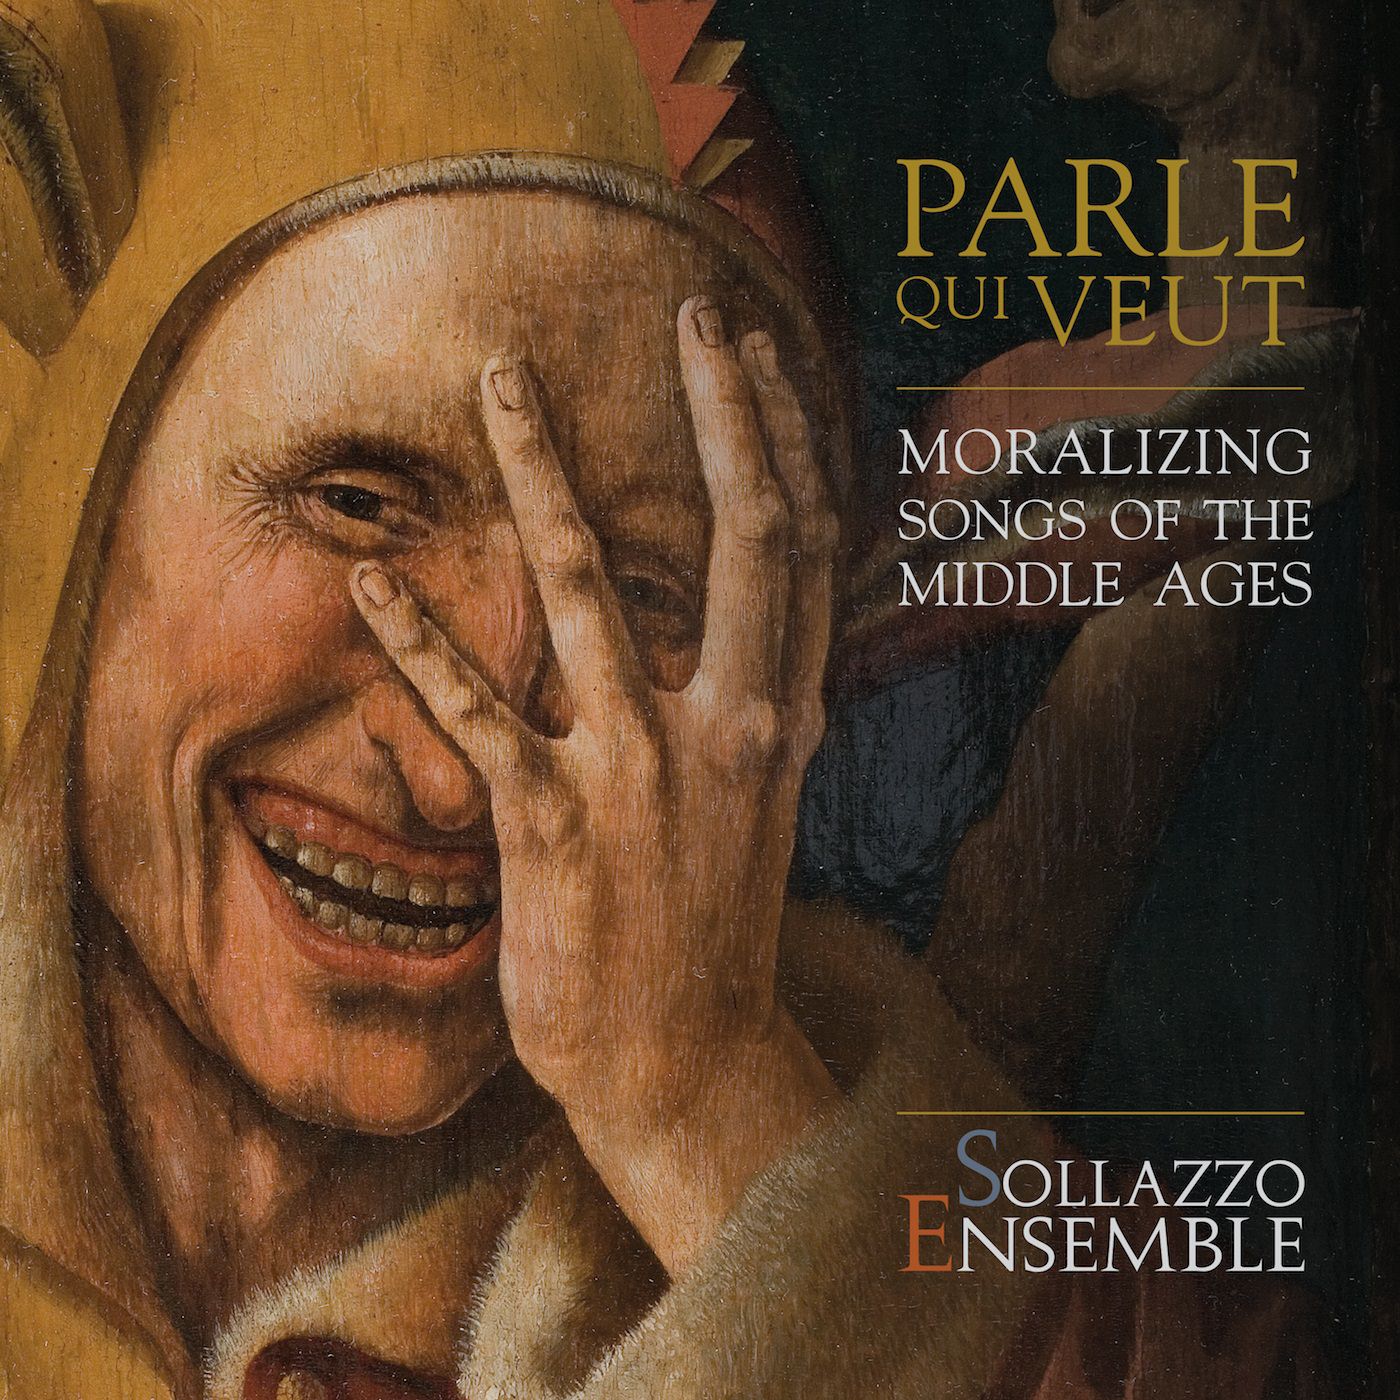 Sollazzo Ensemble - Parle que veut: Moralizing Songs of the Middle Ages (2017) [FLAC 24bit/96kHz]